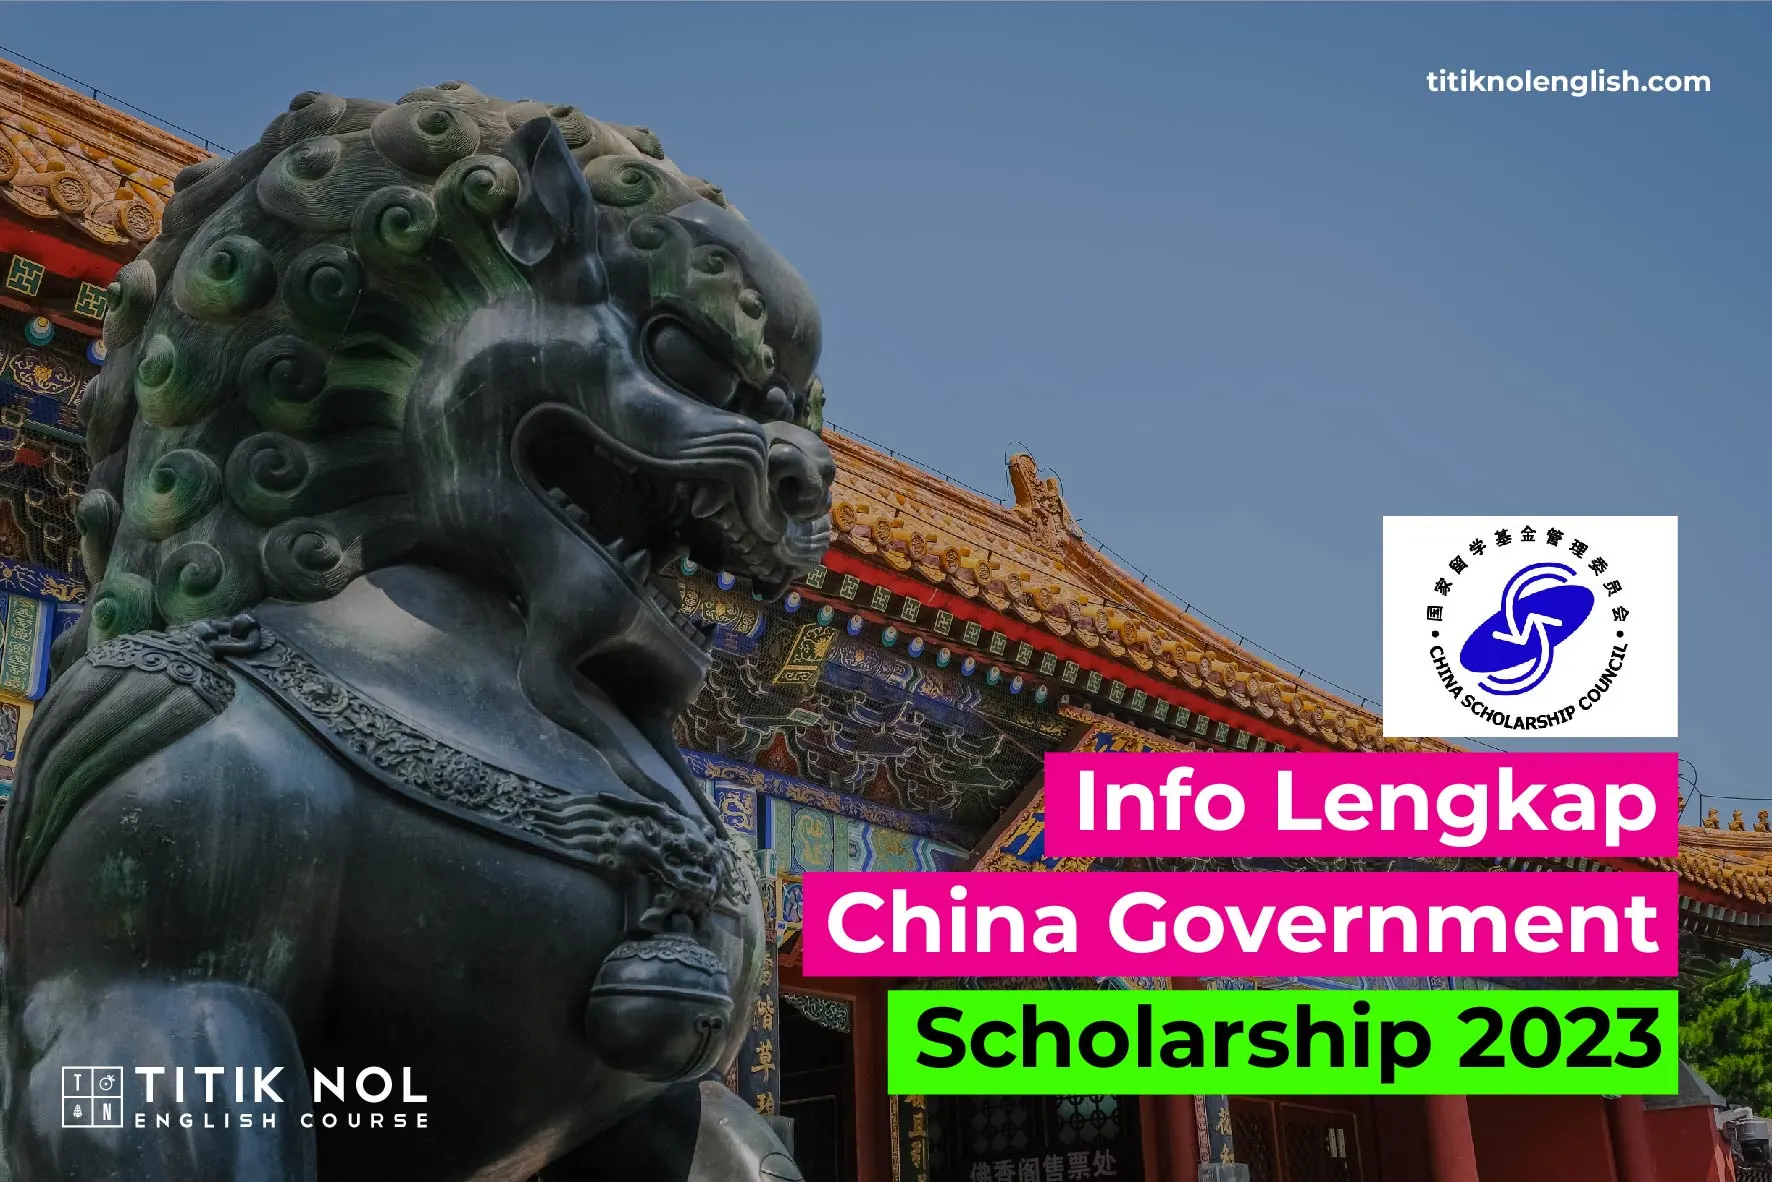 Info-Lengkap-China-Government-Scholarship-2023-04